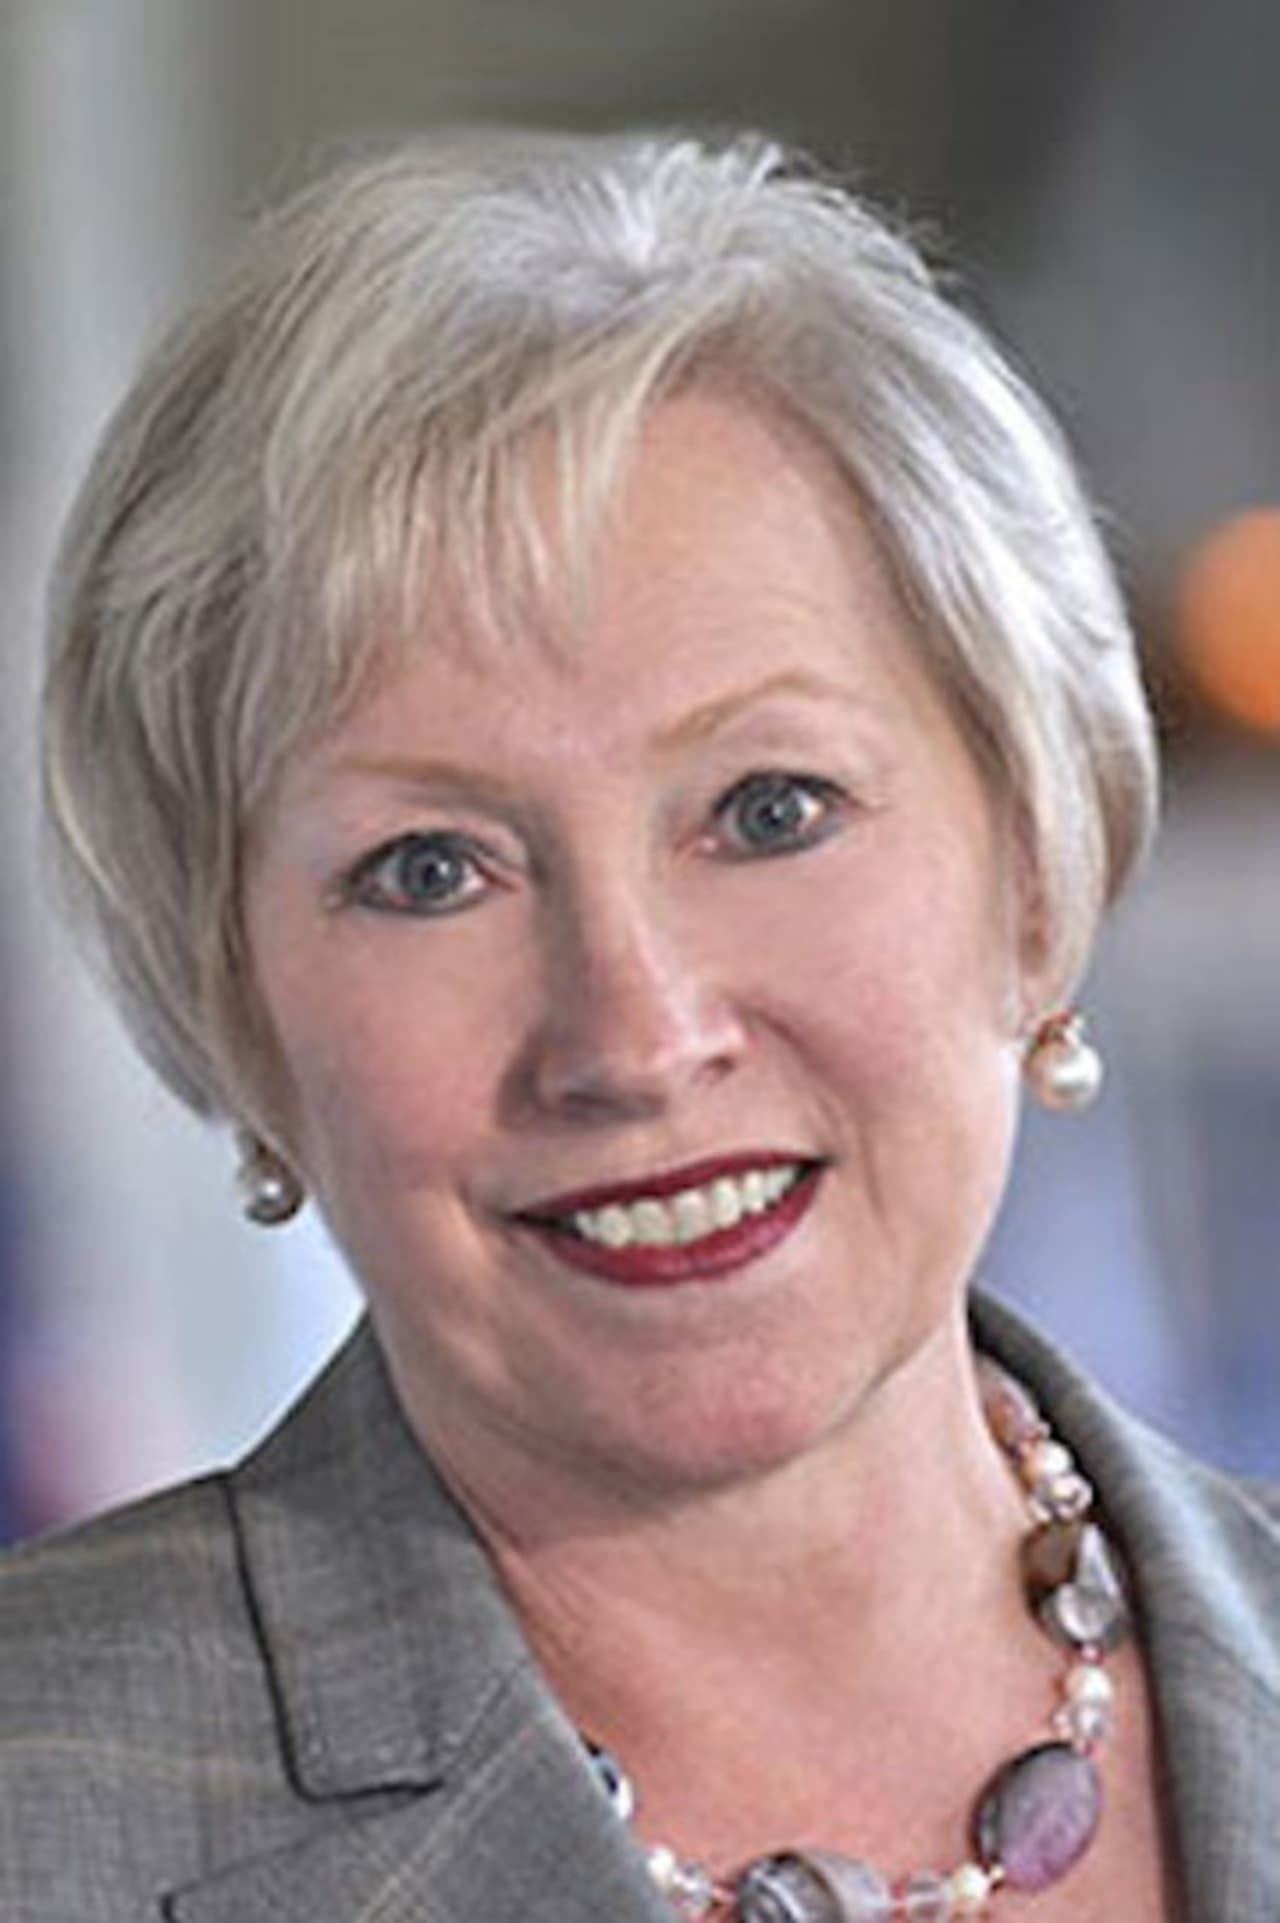 SUNY Chancellor Nancy Zimpher